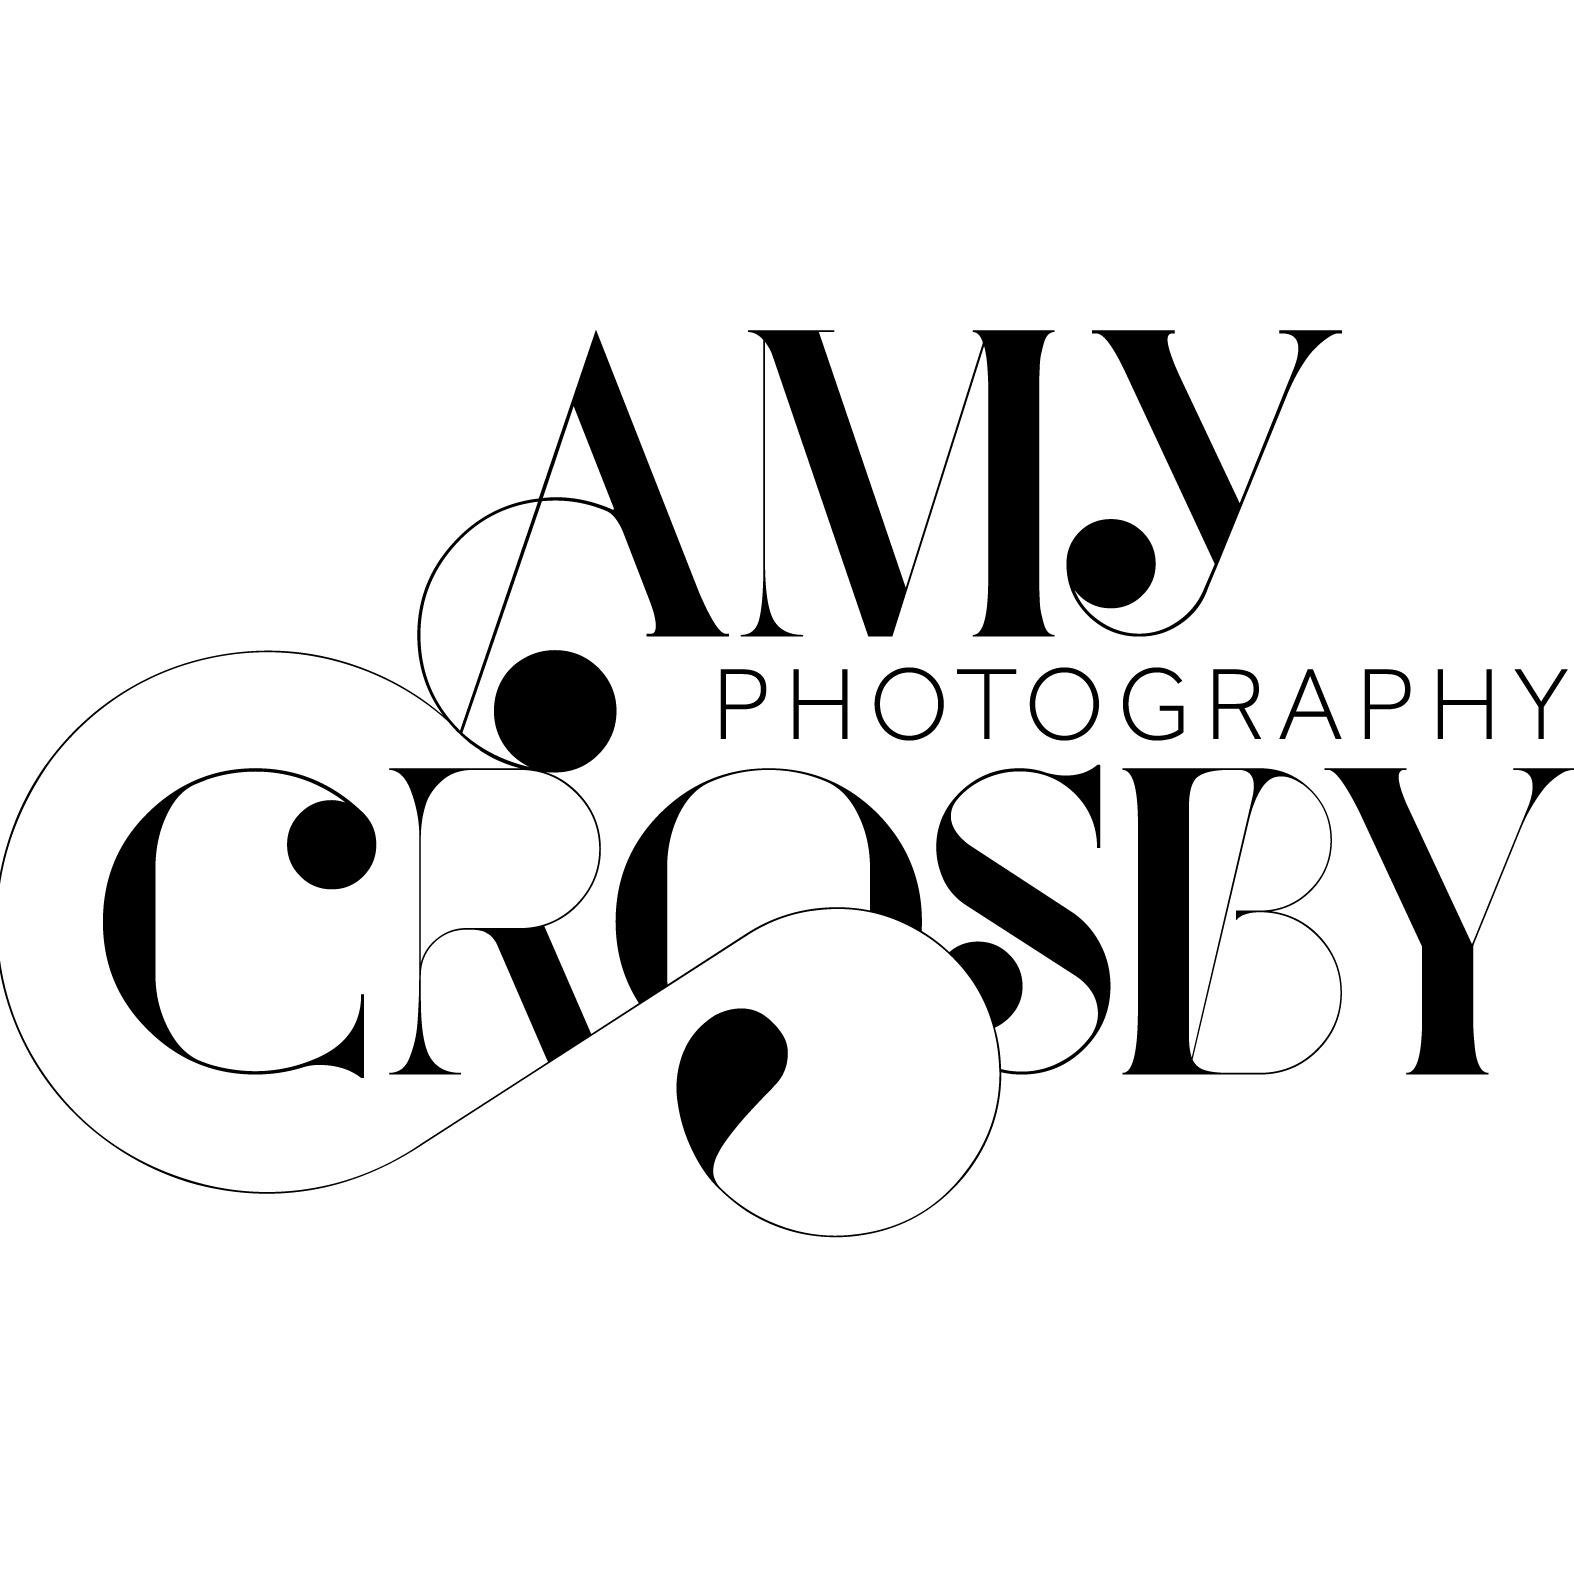 Amy Crosby Photography Photo